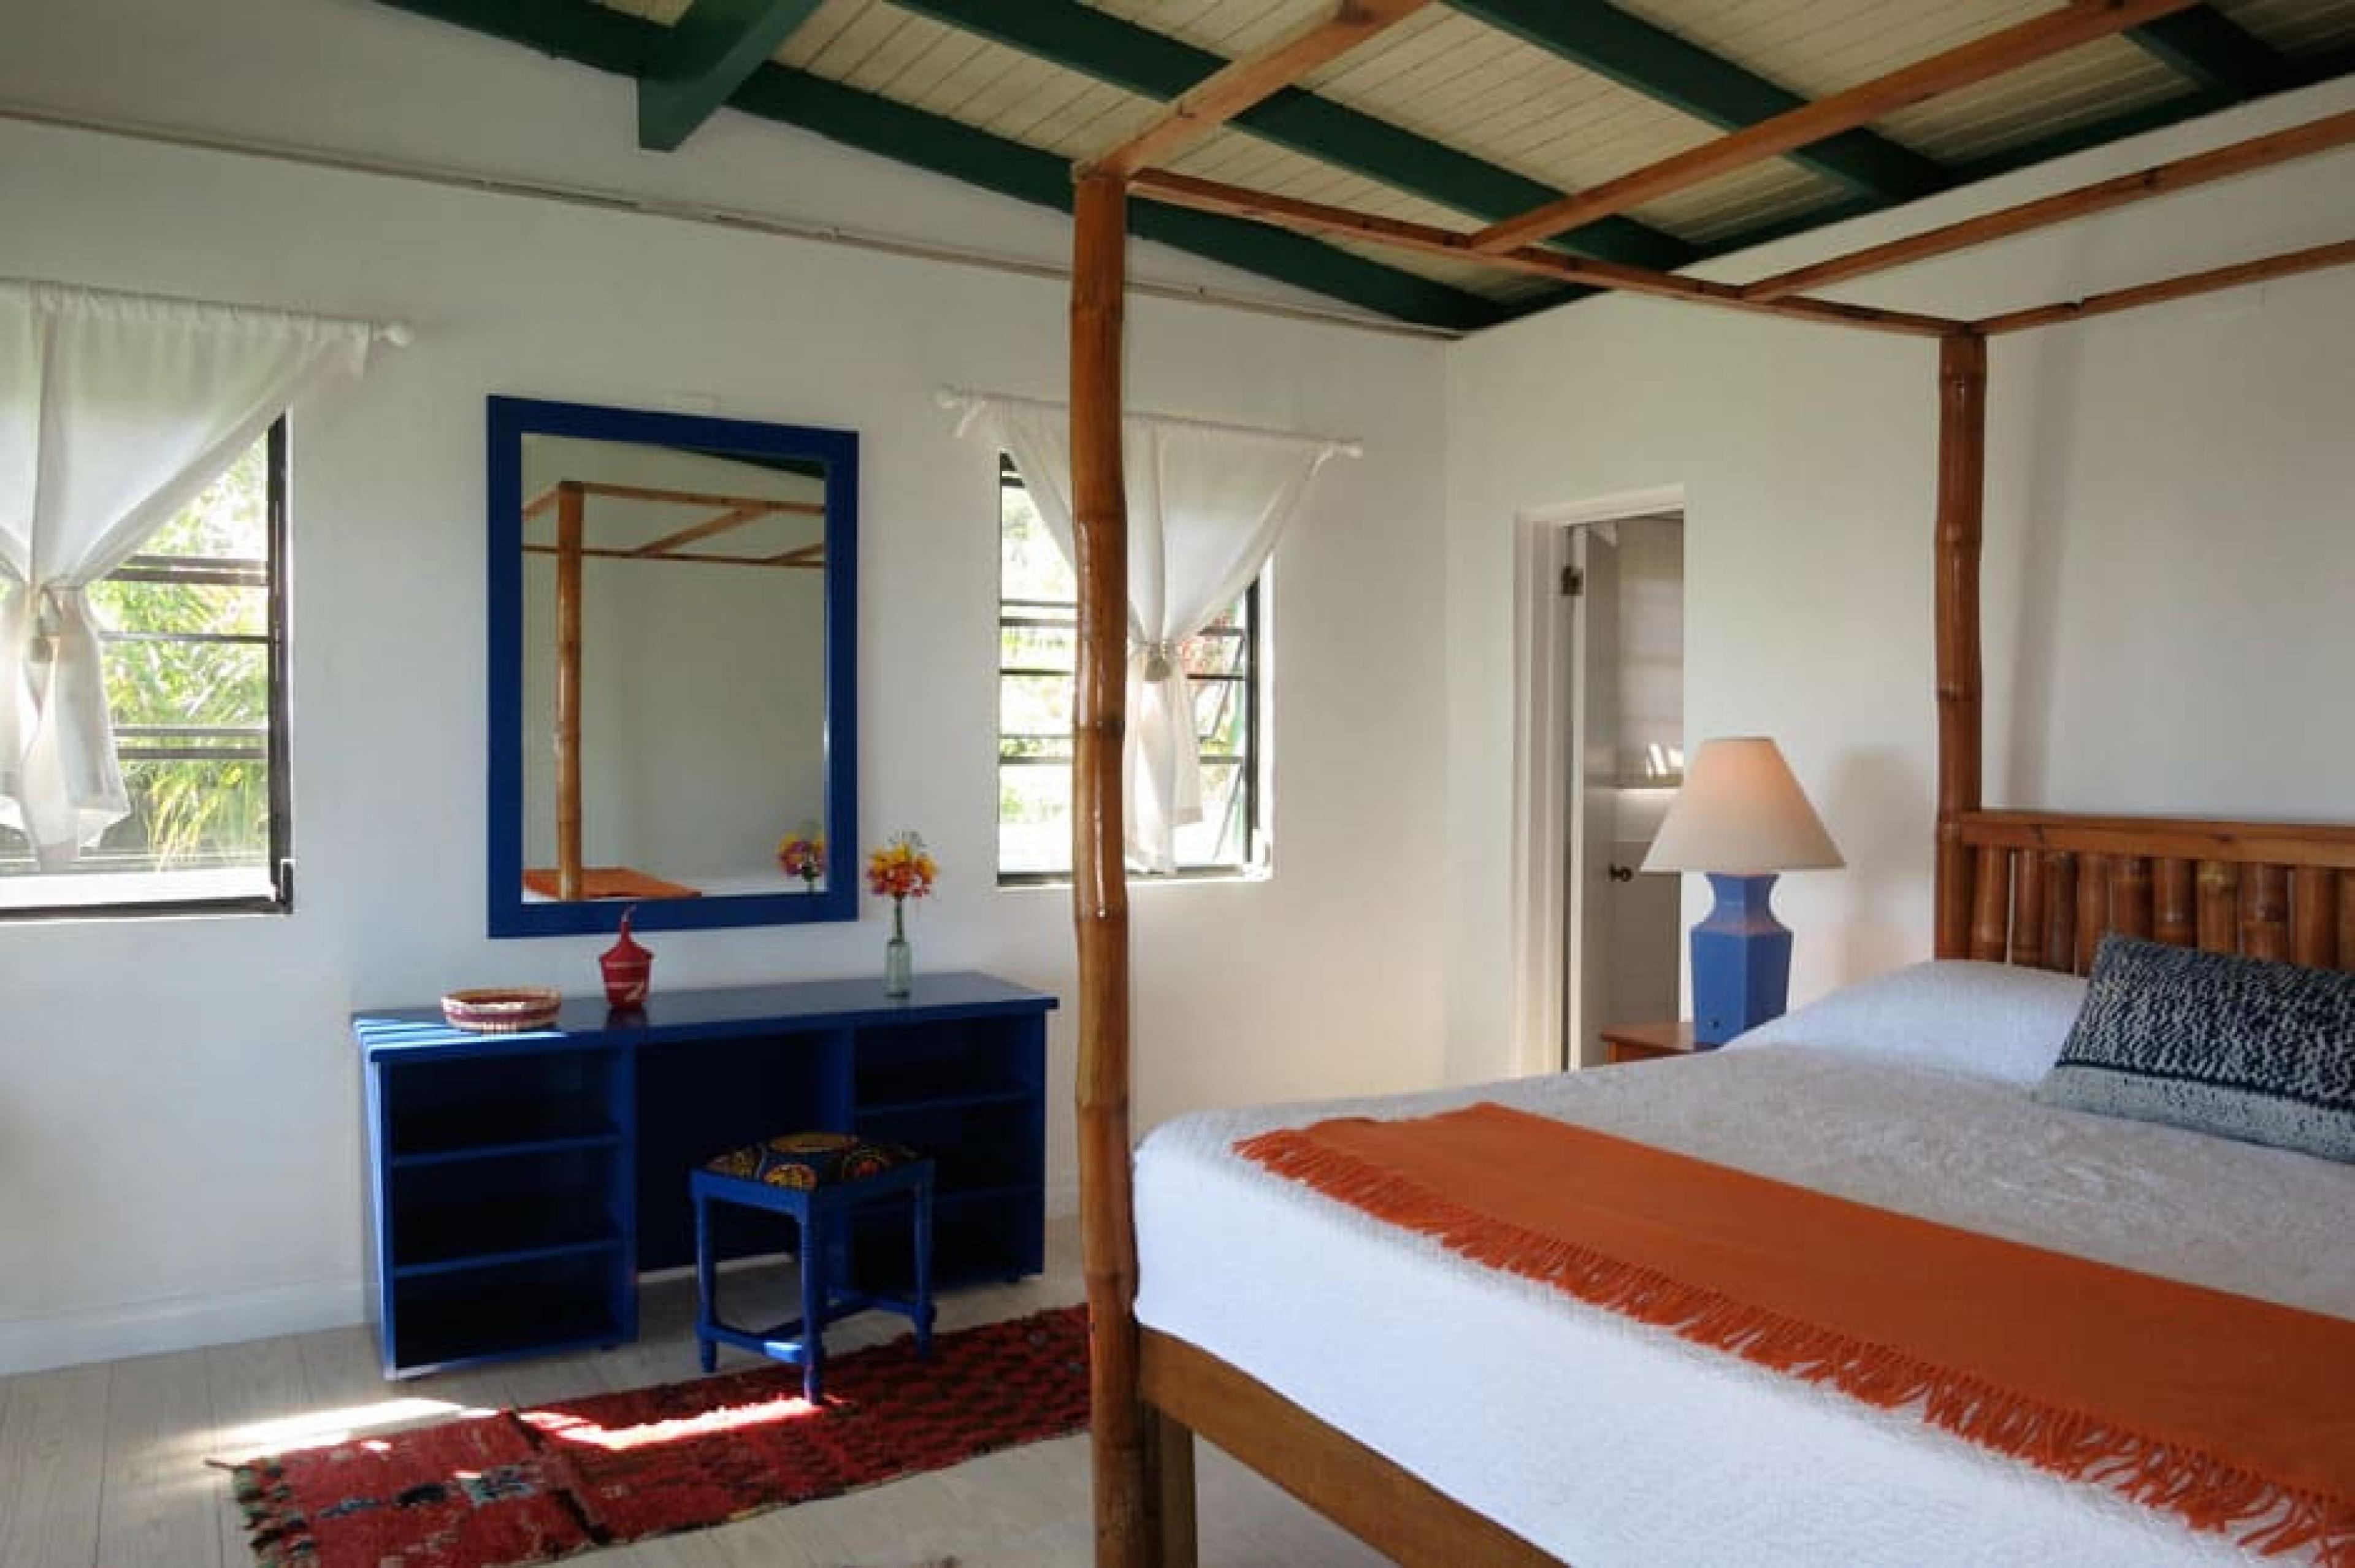 Bedroom at Golden Rock Inn, Nevis, Caribbean